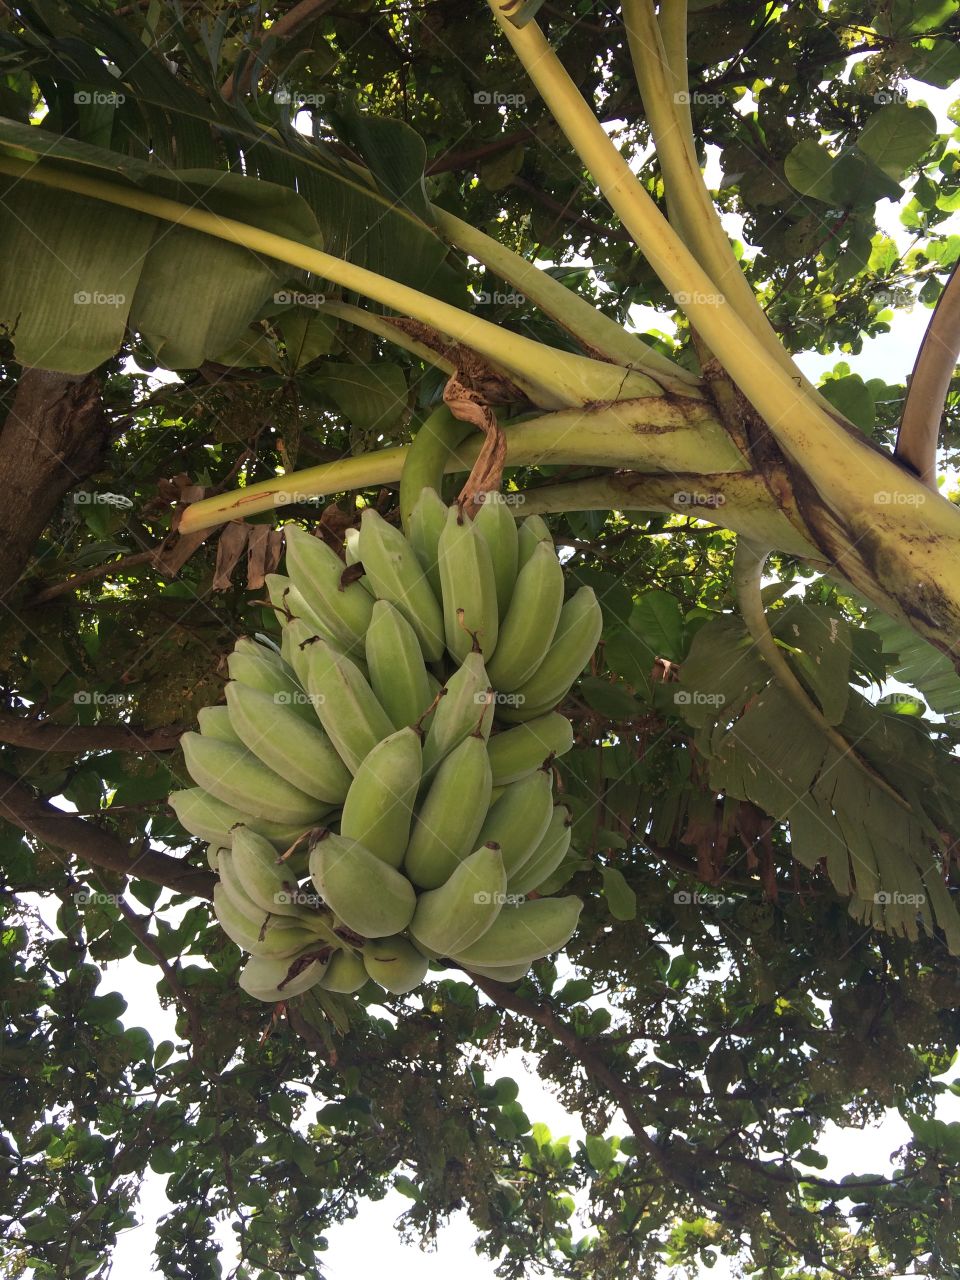 Banana on the tree. Have you seen bananas freshly growing on its tree?